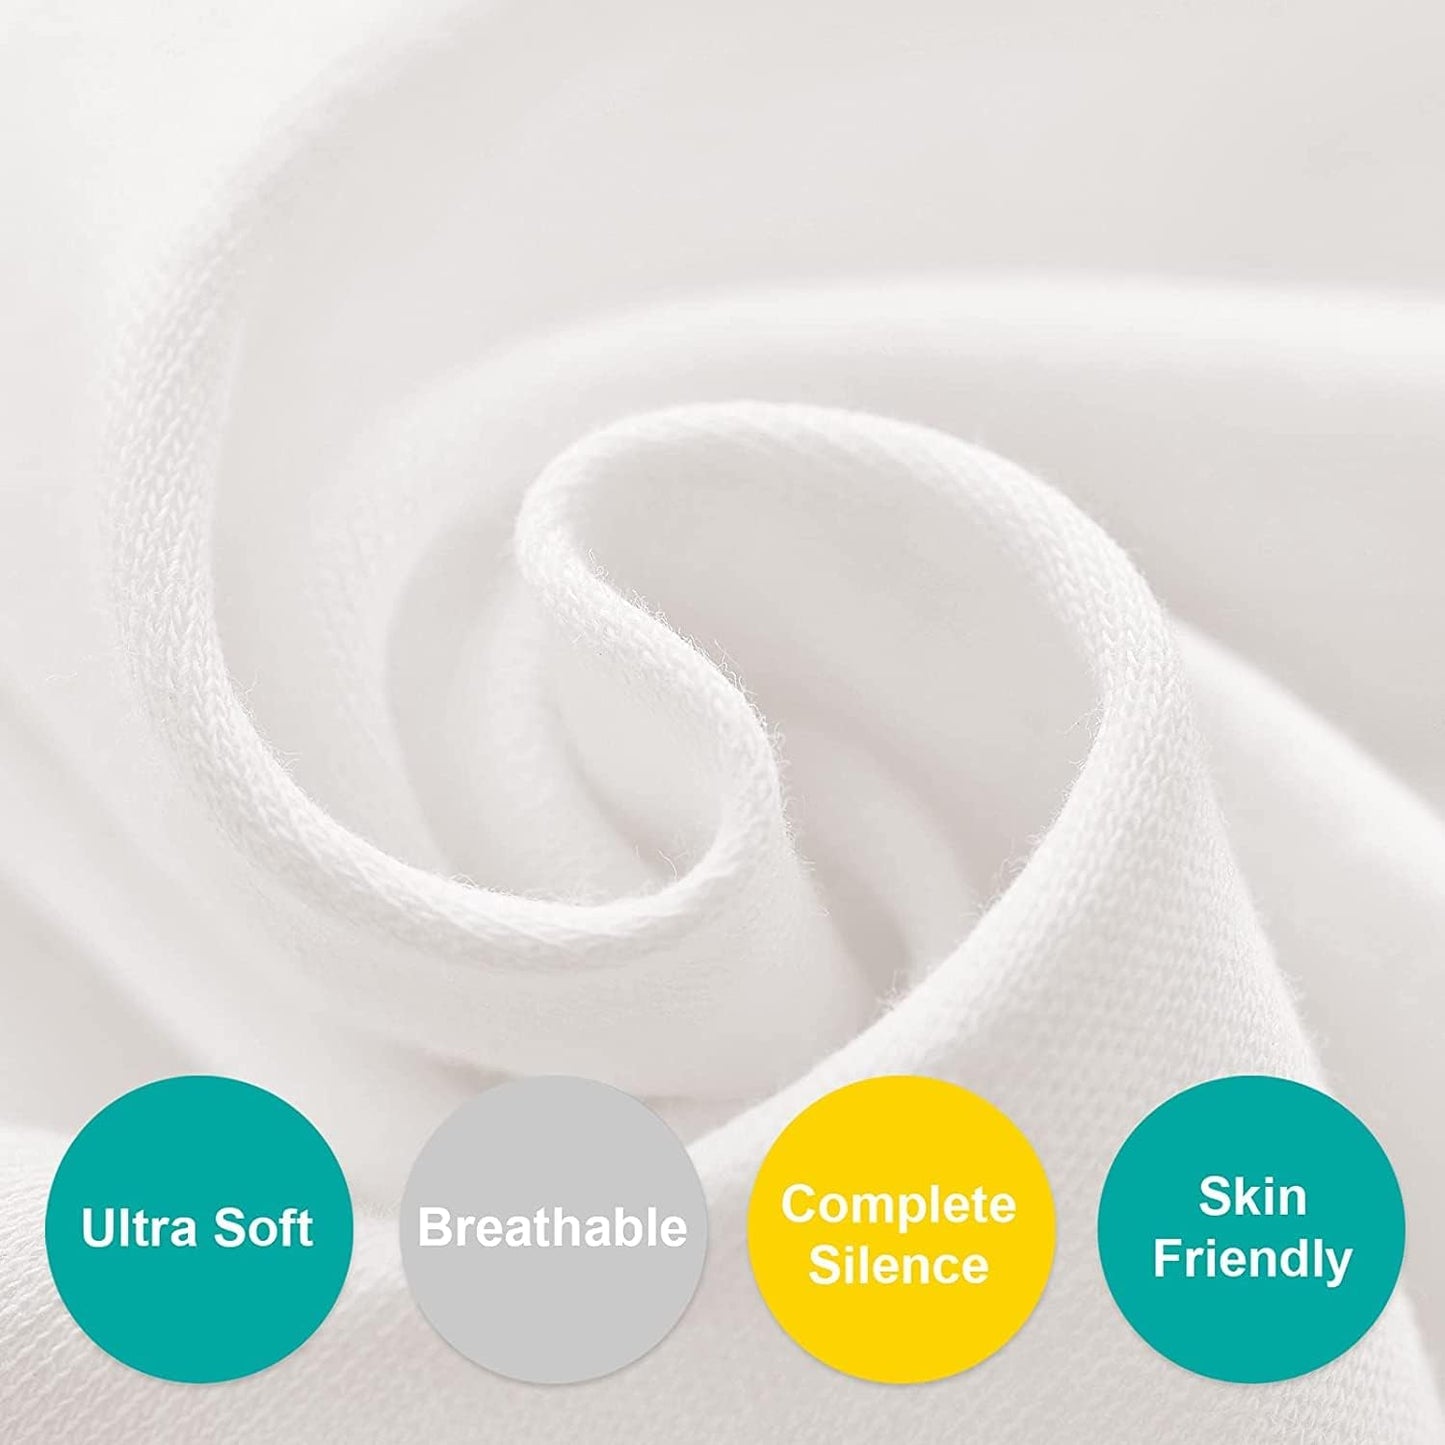 Bassinet Sheets - Fit Maxi-Cosi Iora Bedside Bassinet, 2 Pack, 100% Organic Cotton